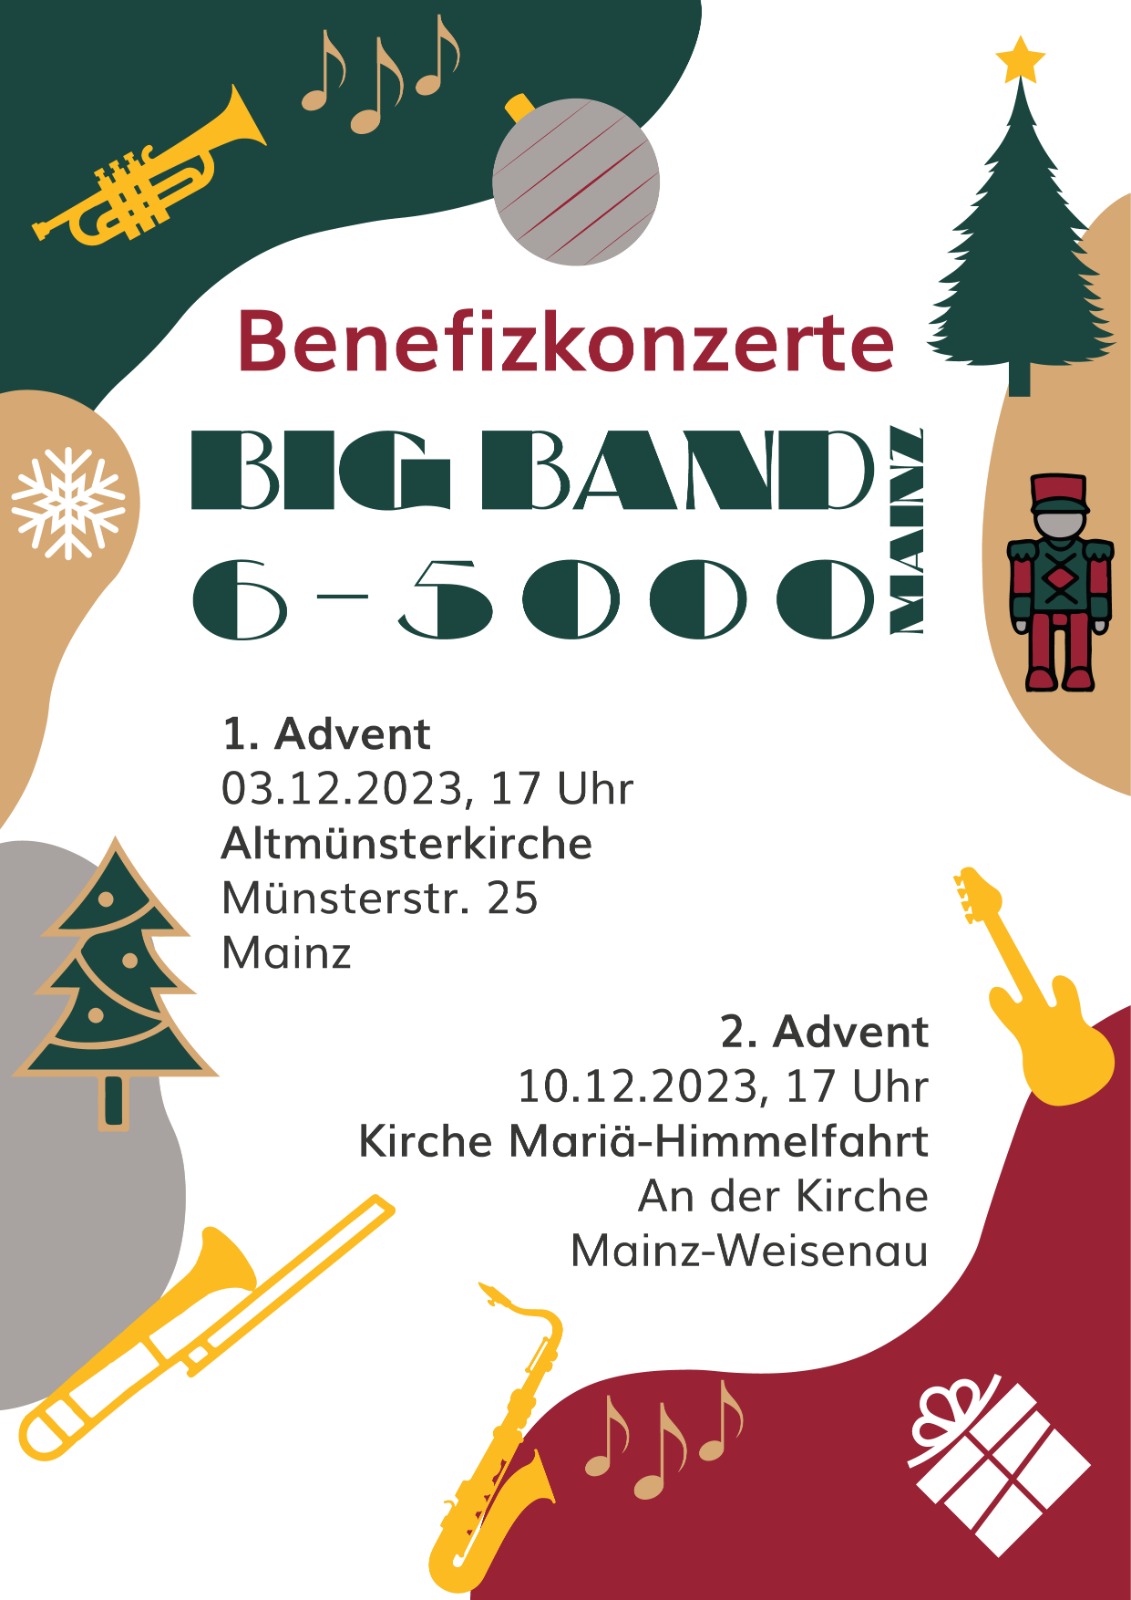 Benefizkonzert (c) Big Band 6-5000